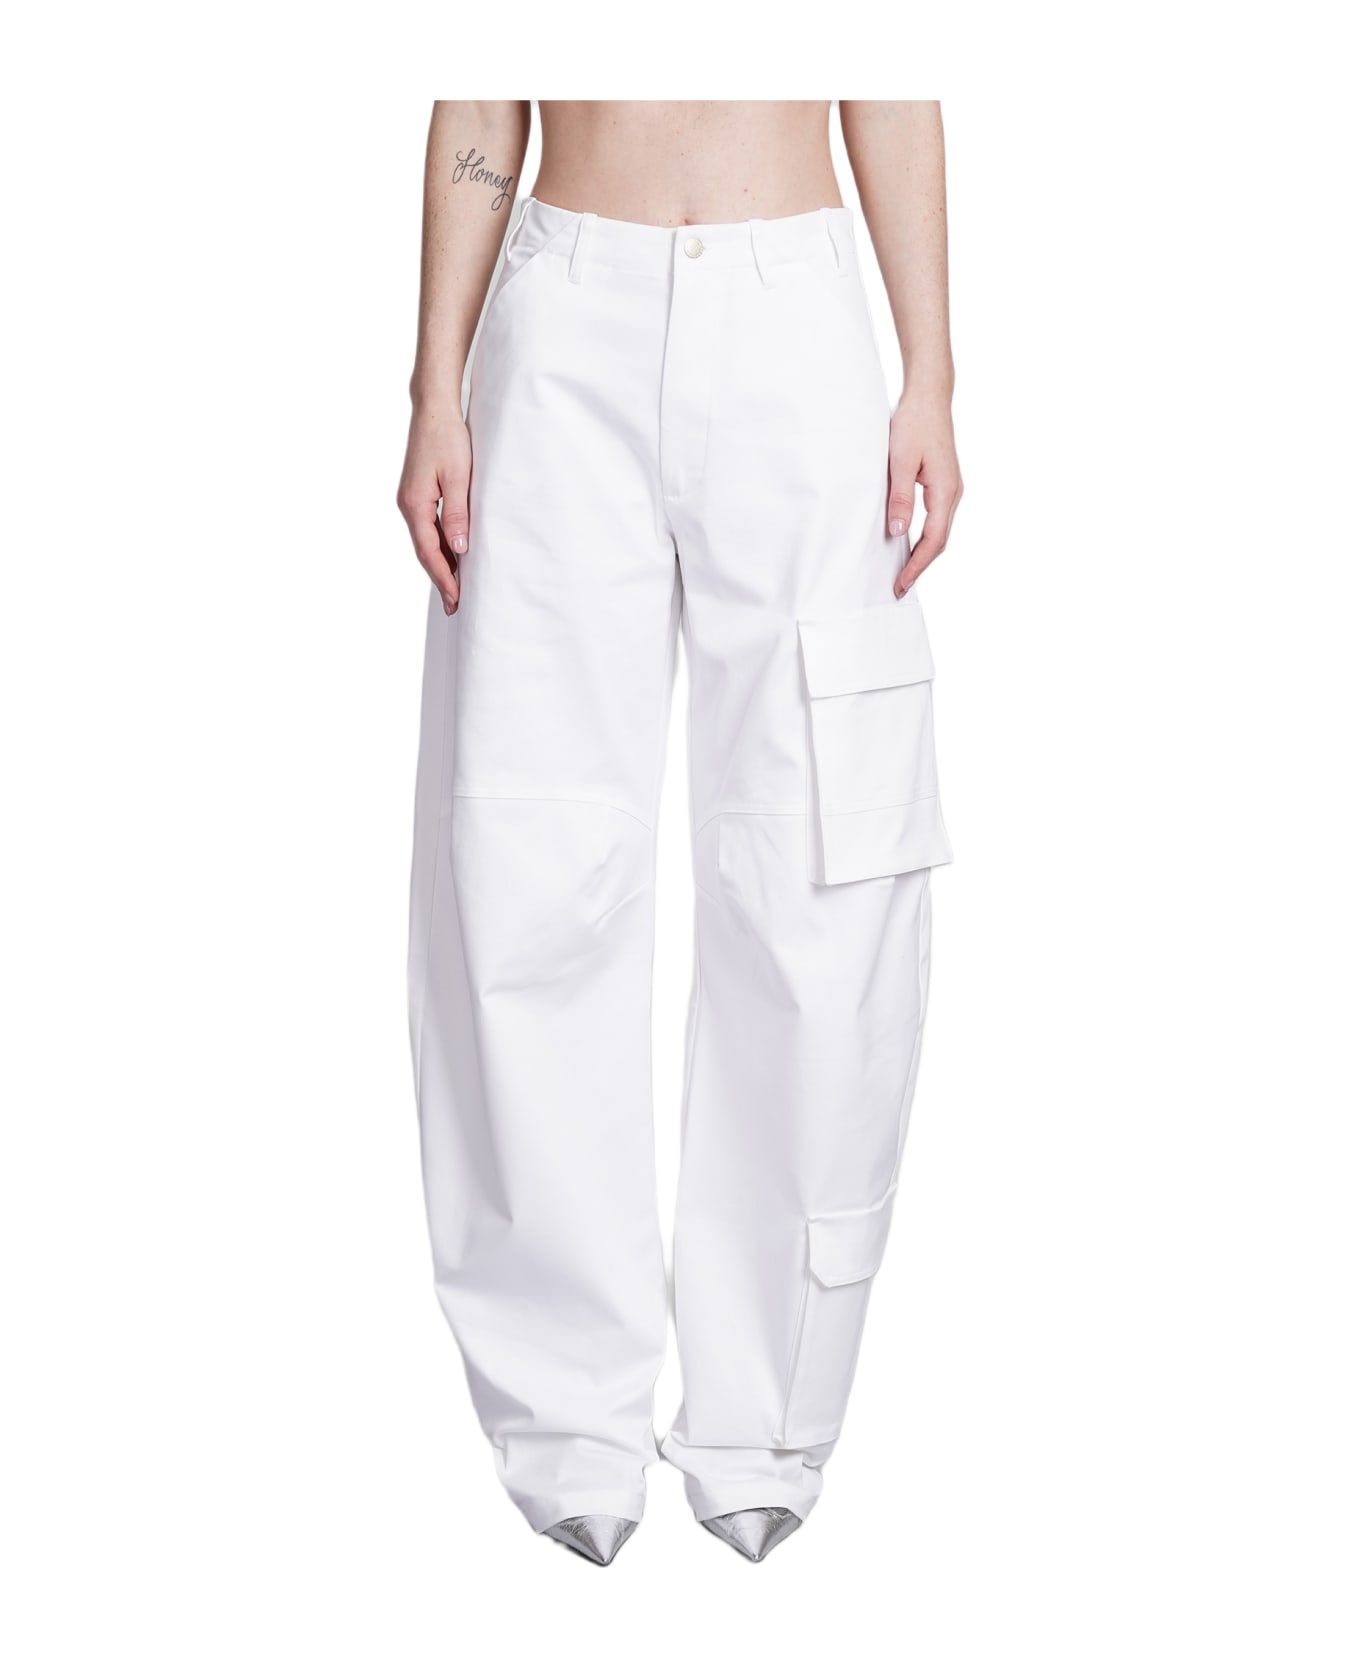 DARKPARK Rose Pants In White Cotton - white